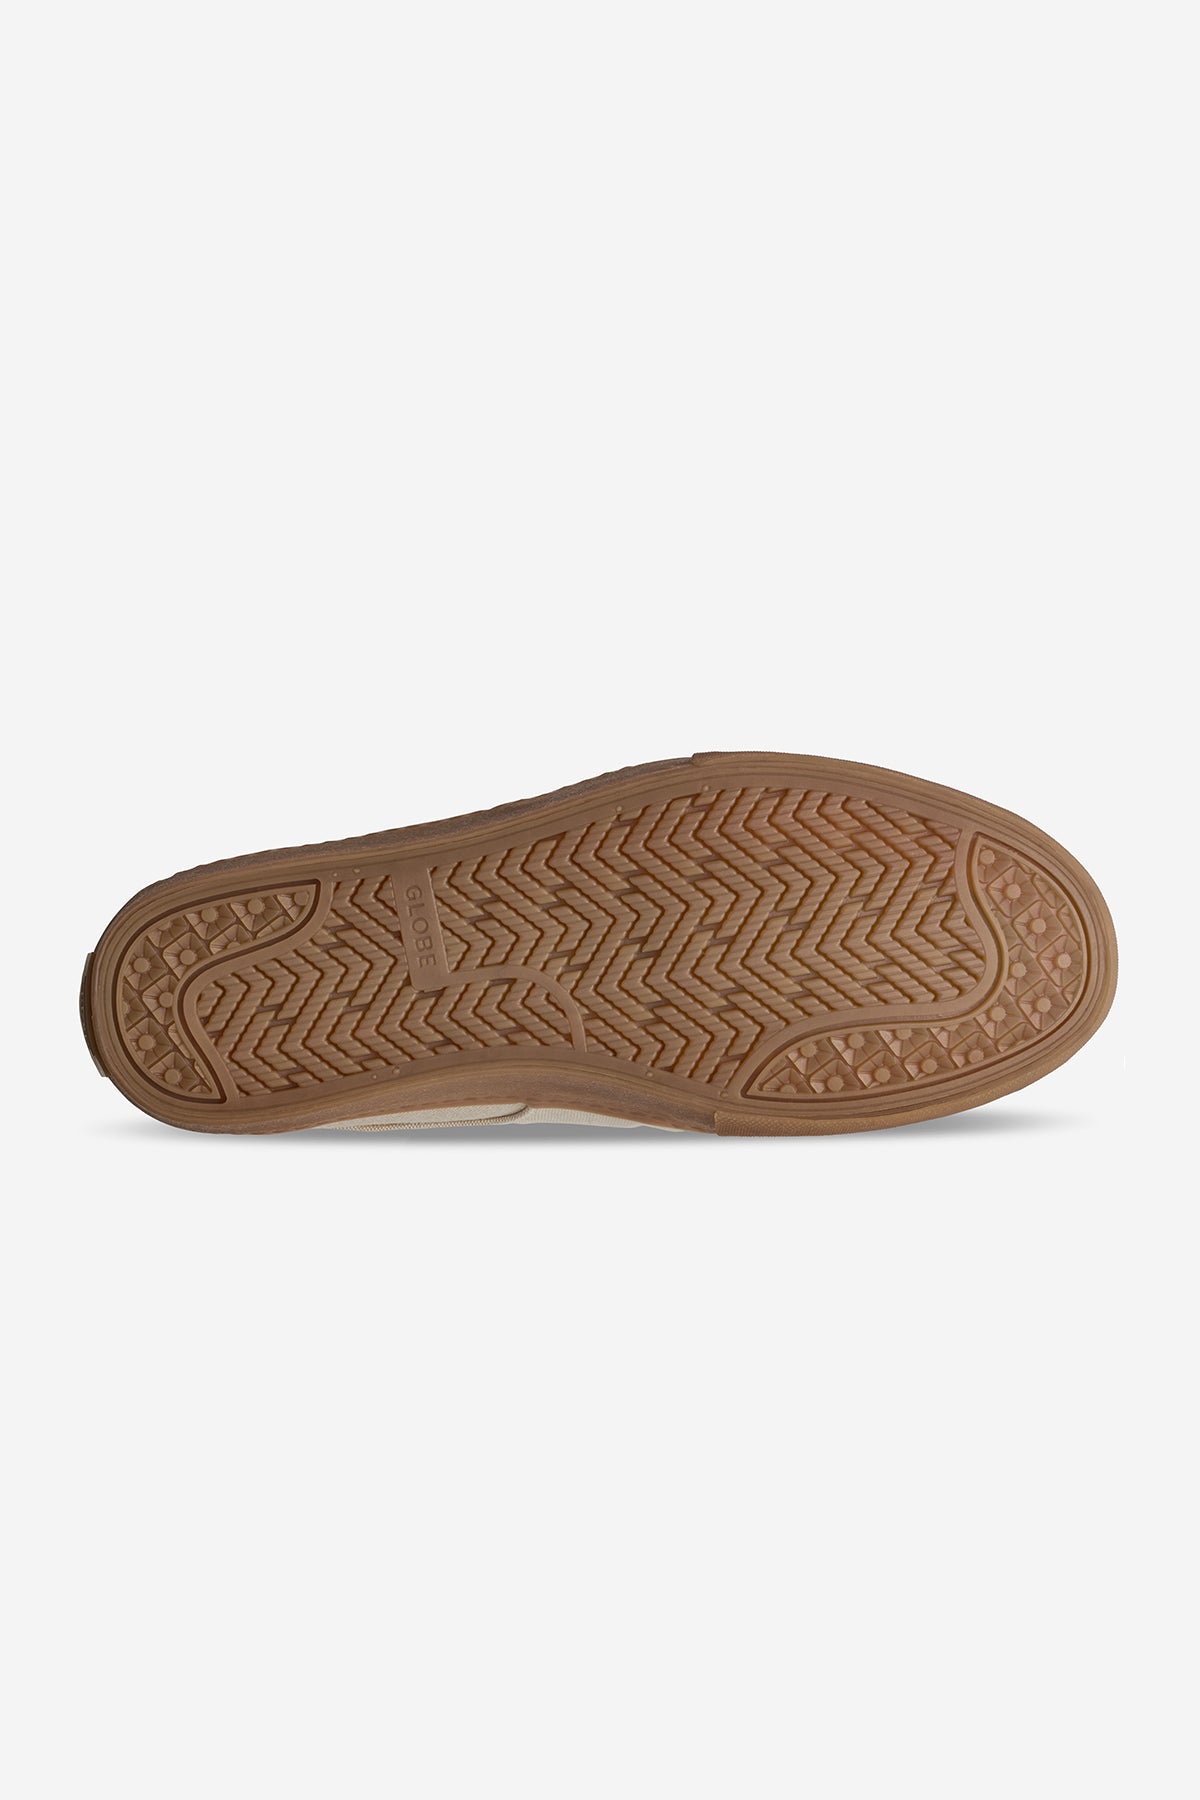 Globe - Liaizon - Hemp/Regrind Gum - skateboard Schuhe